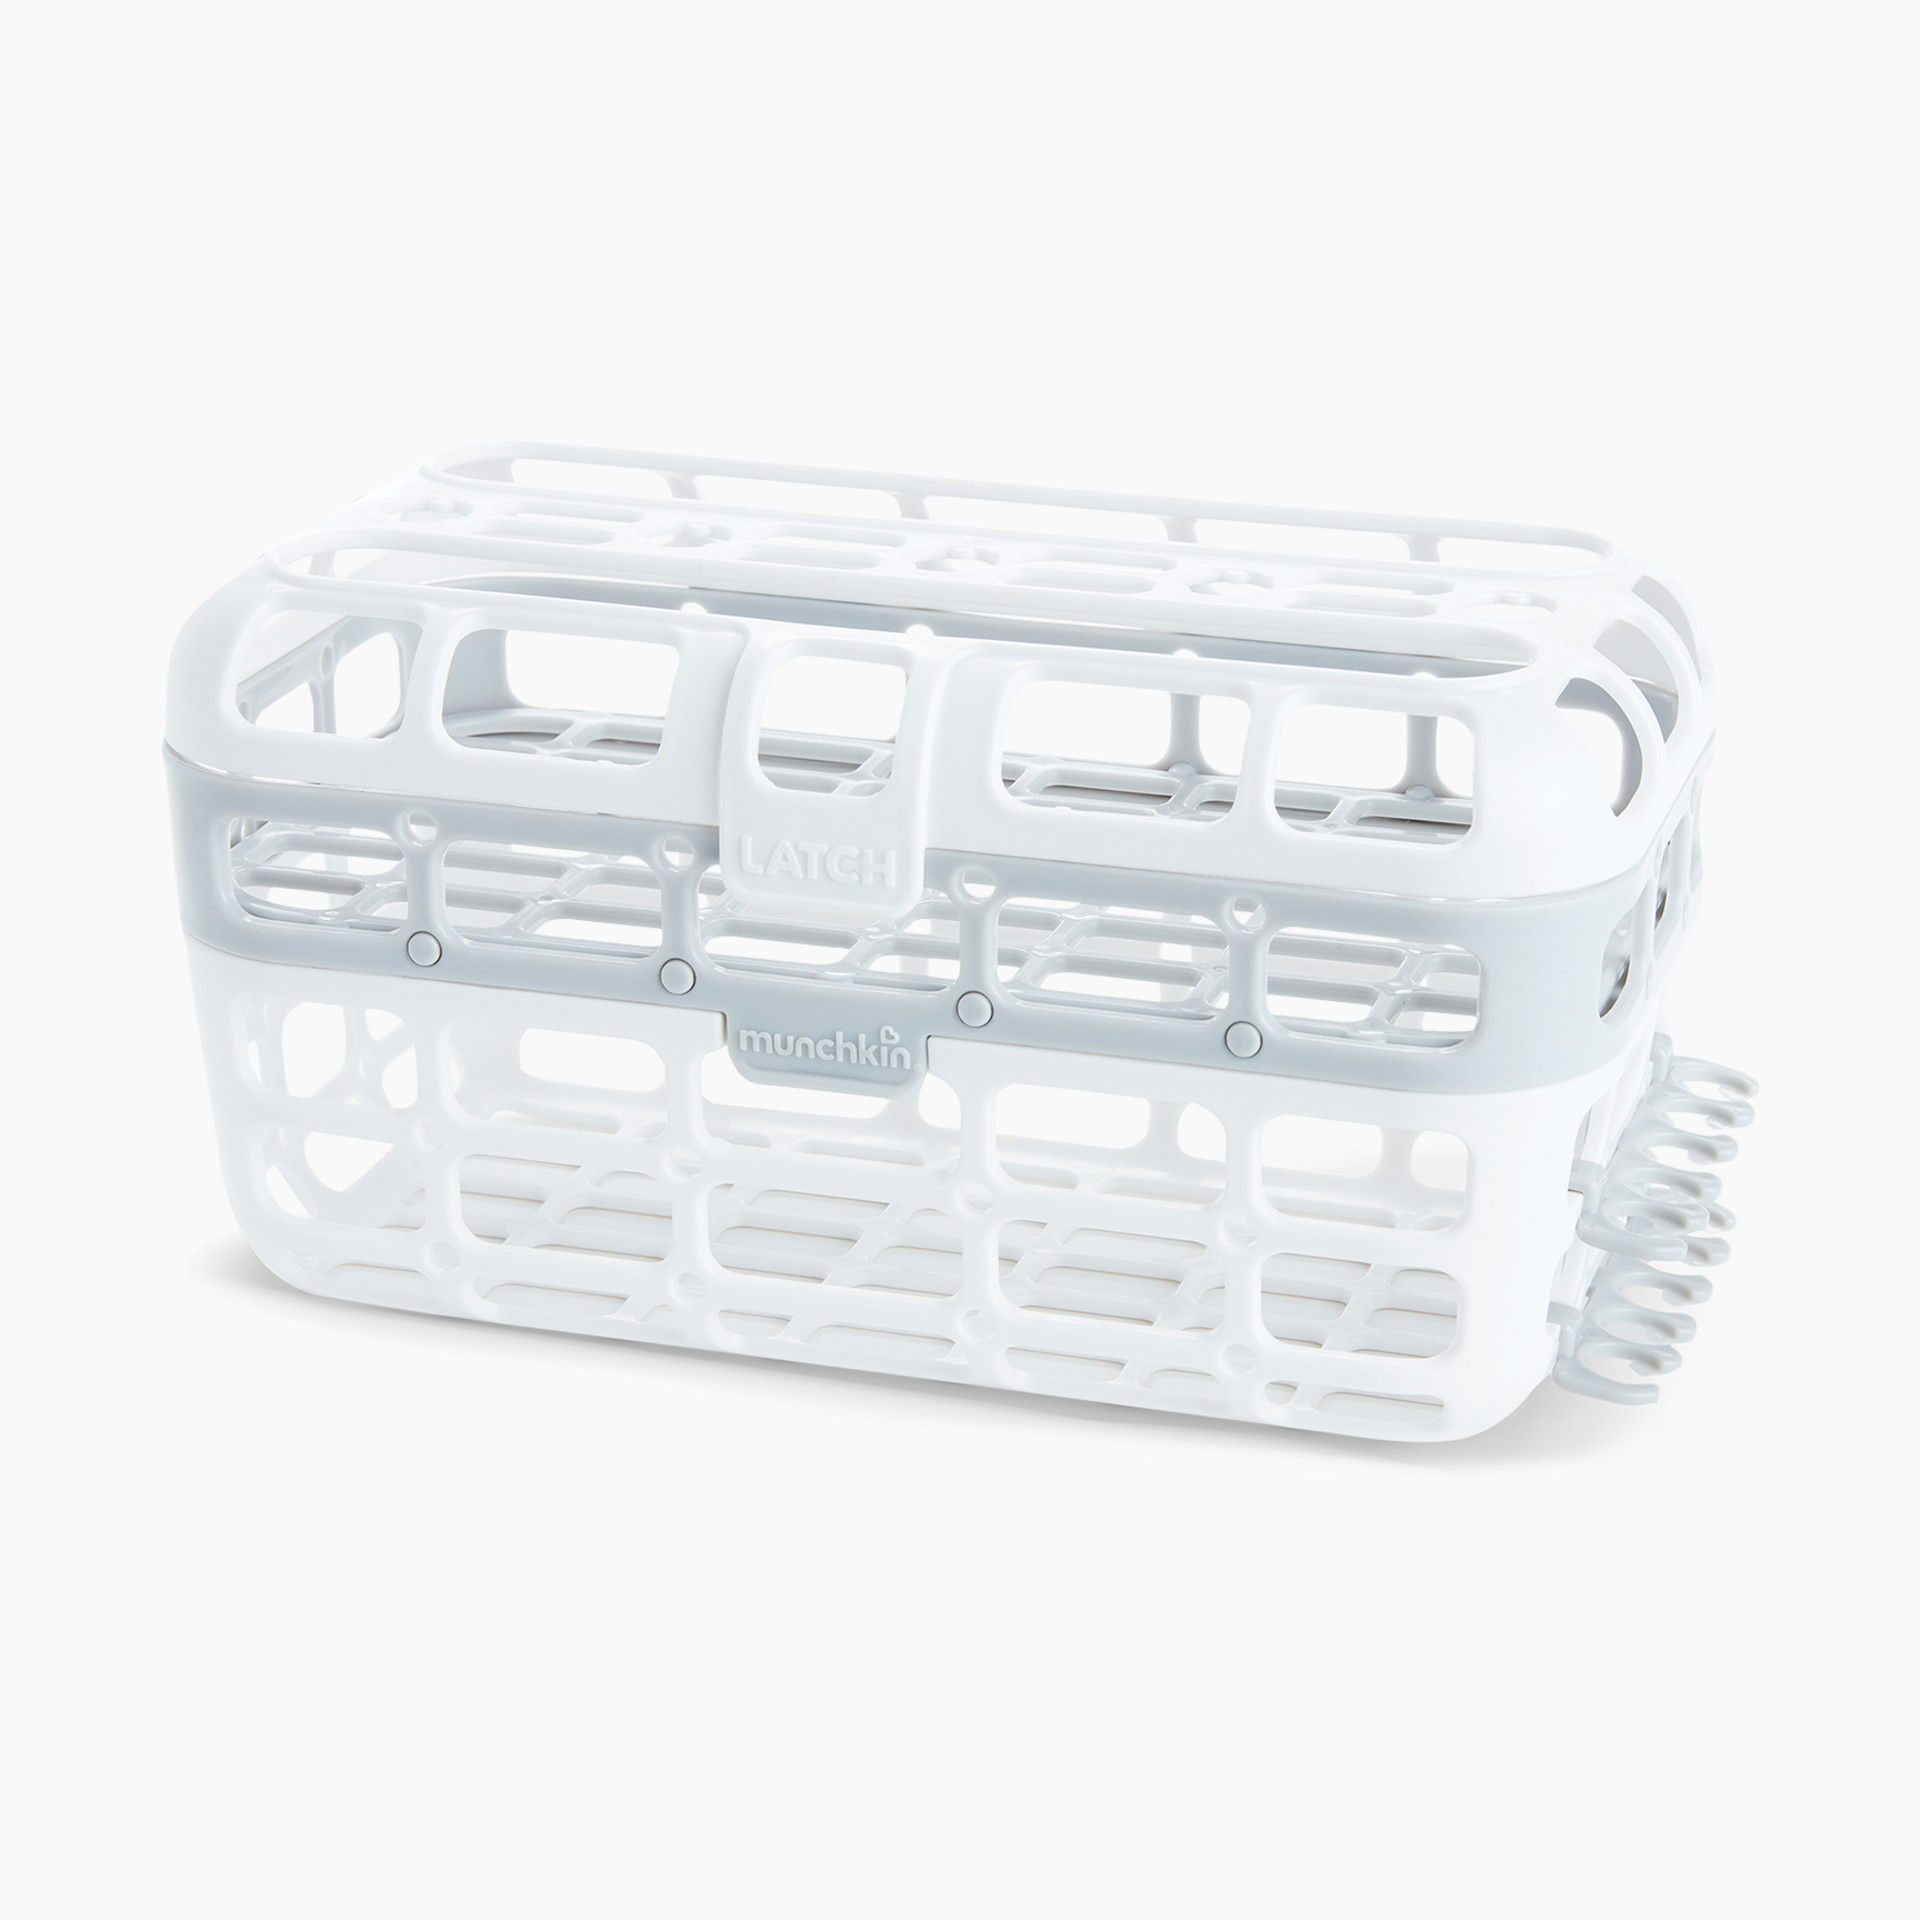 Boon Clutch Dishwasher Basket - Baby Bottle Parts Dishwasher Basket - Baby  Bottle Storage and, 1 Count - Harris Teeter